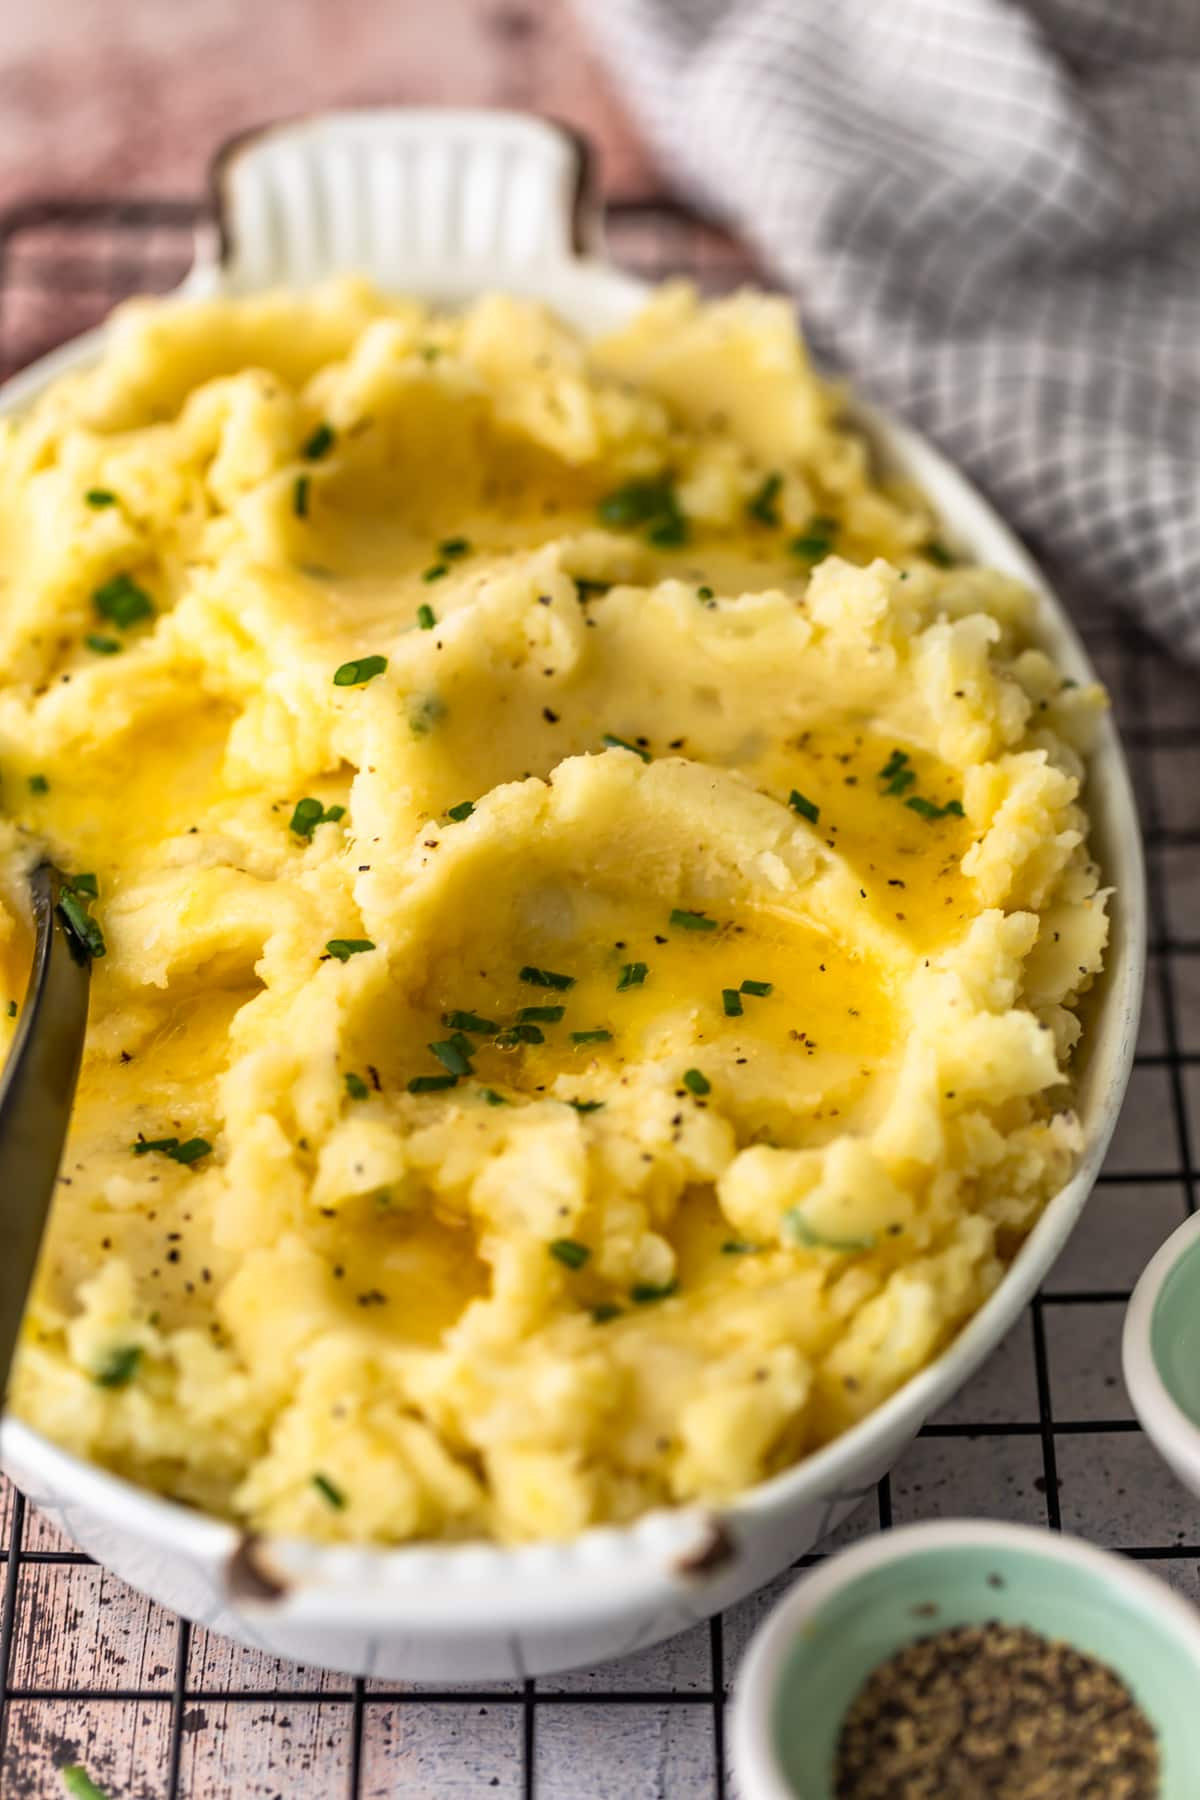 Vegan Mashed Potato Recipes
 “Cheesy” Vegan Mashed Potatoes Recipe Dairy Free Mashed